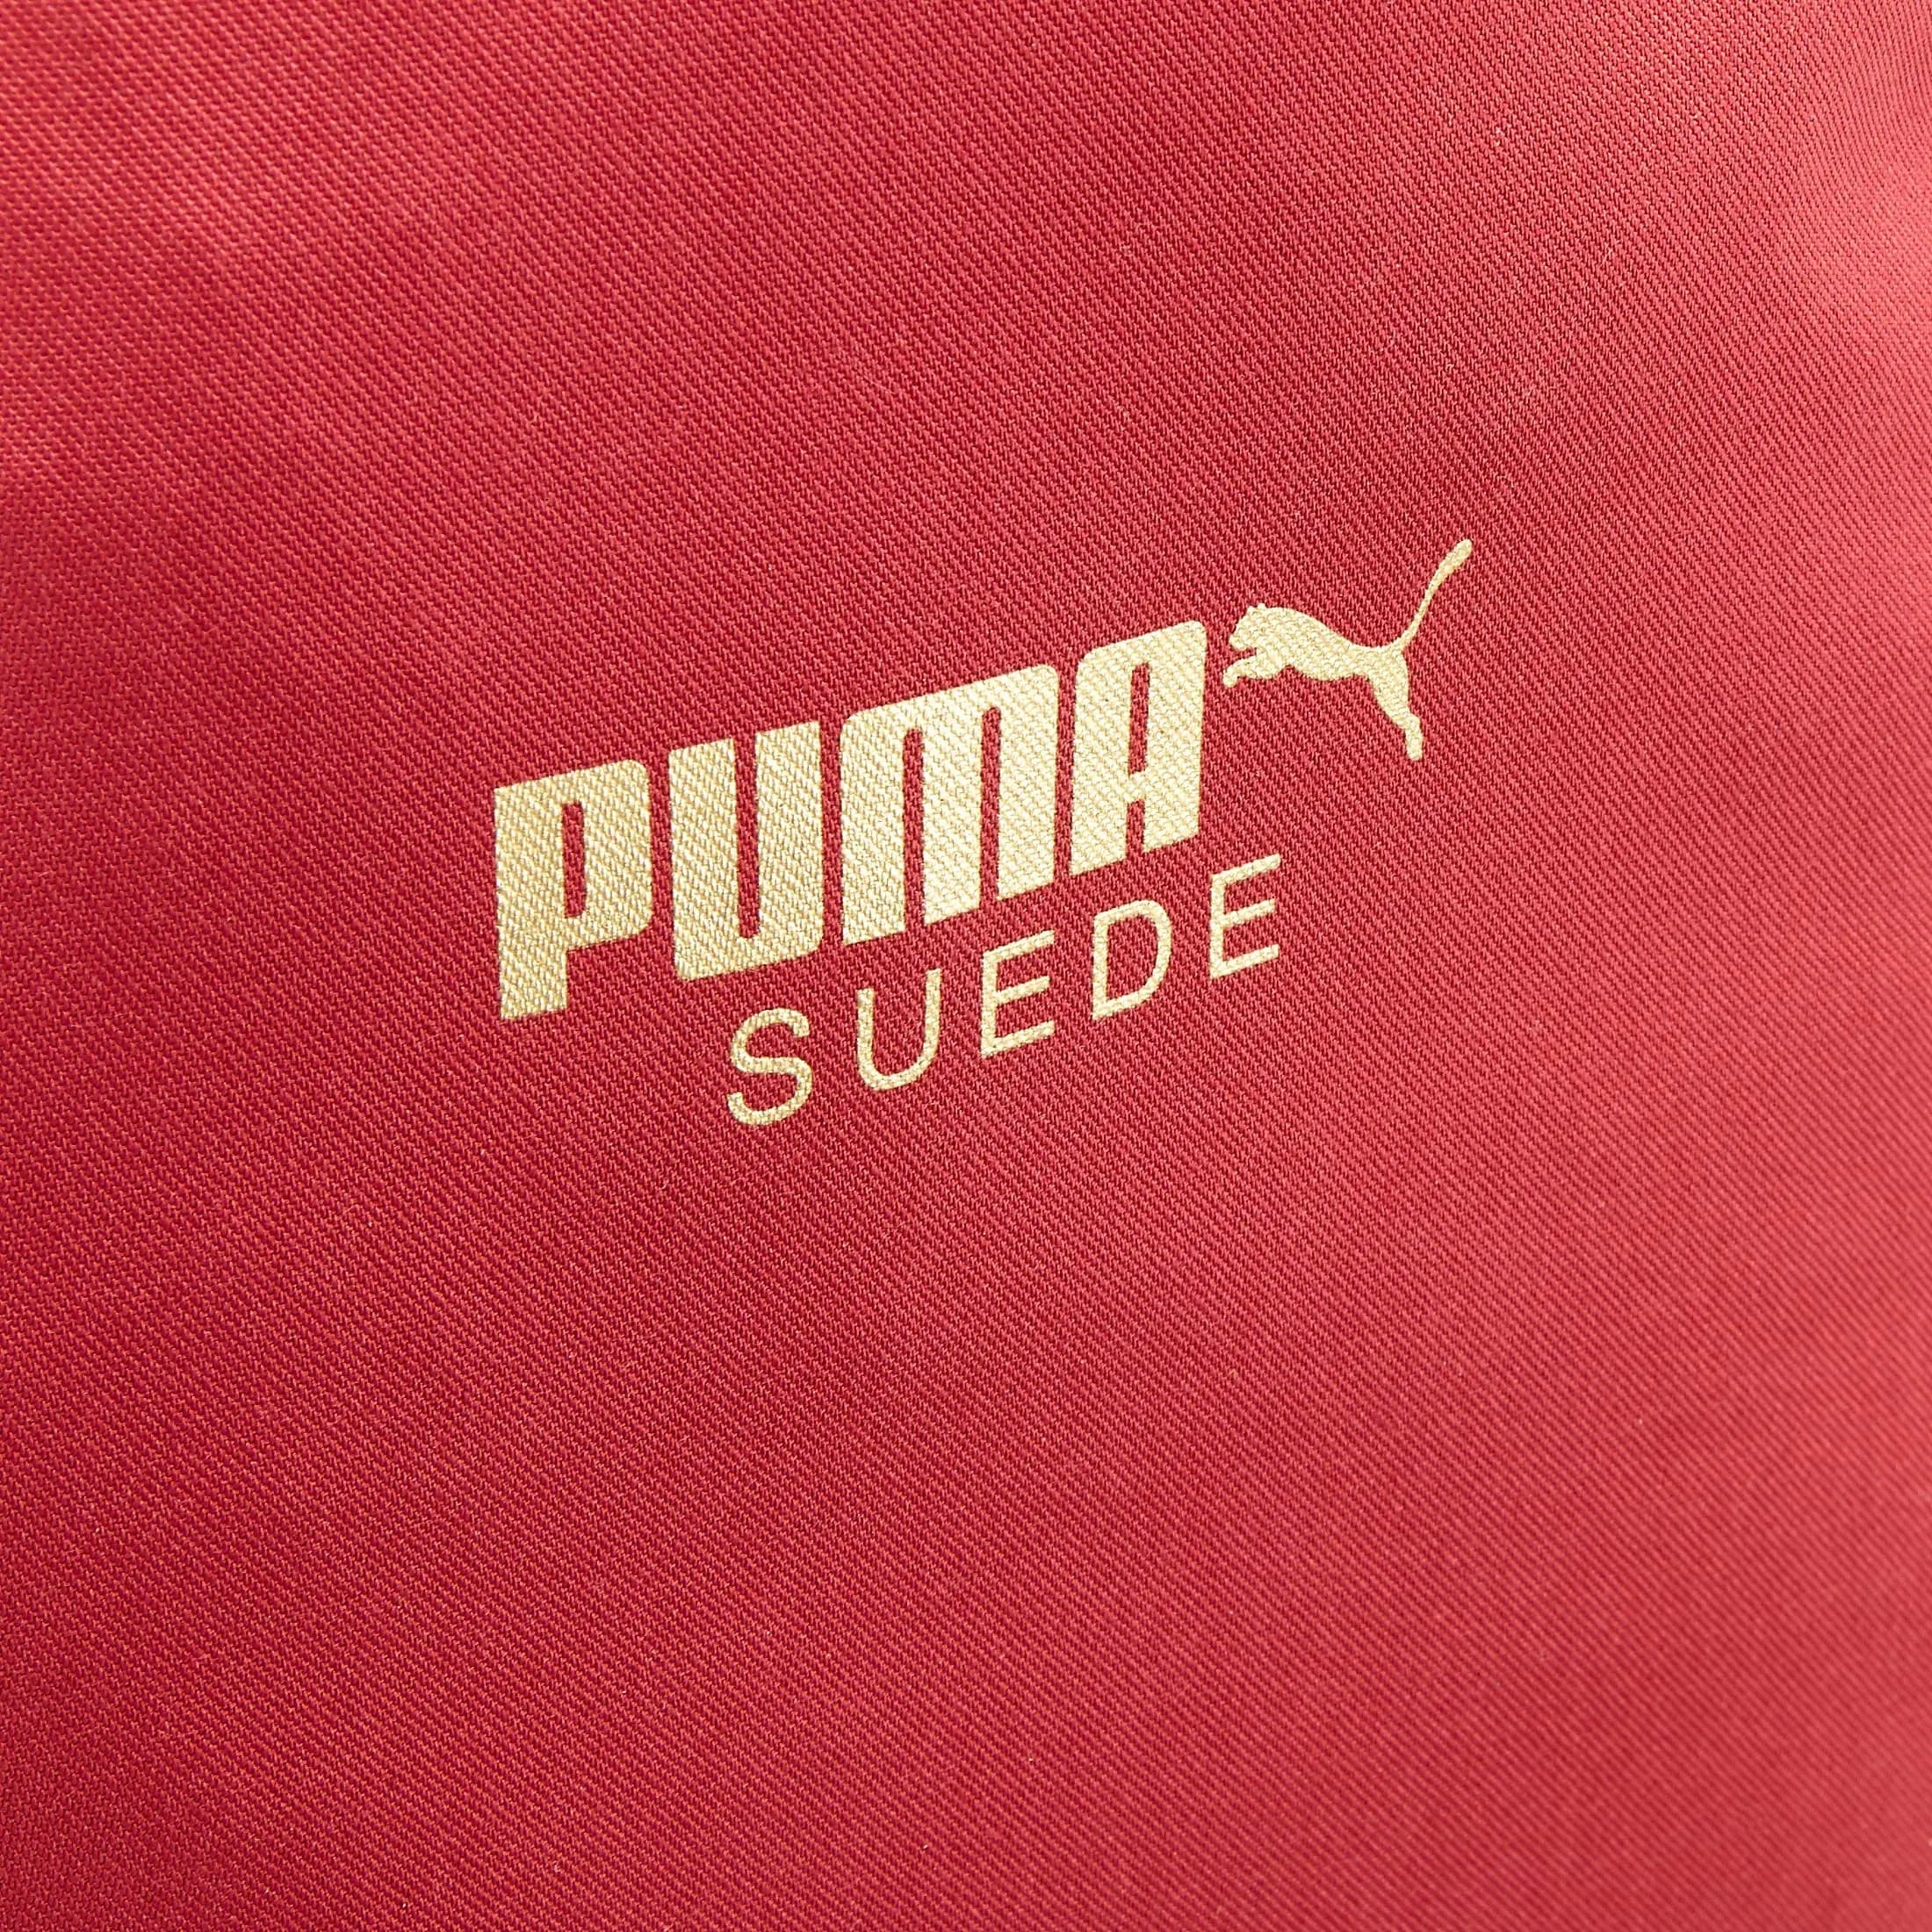 Puma Suede Rucksack 46 cm - red dahlia